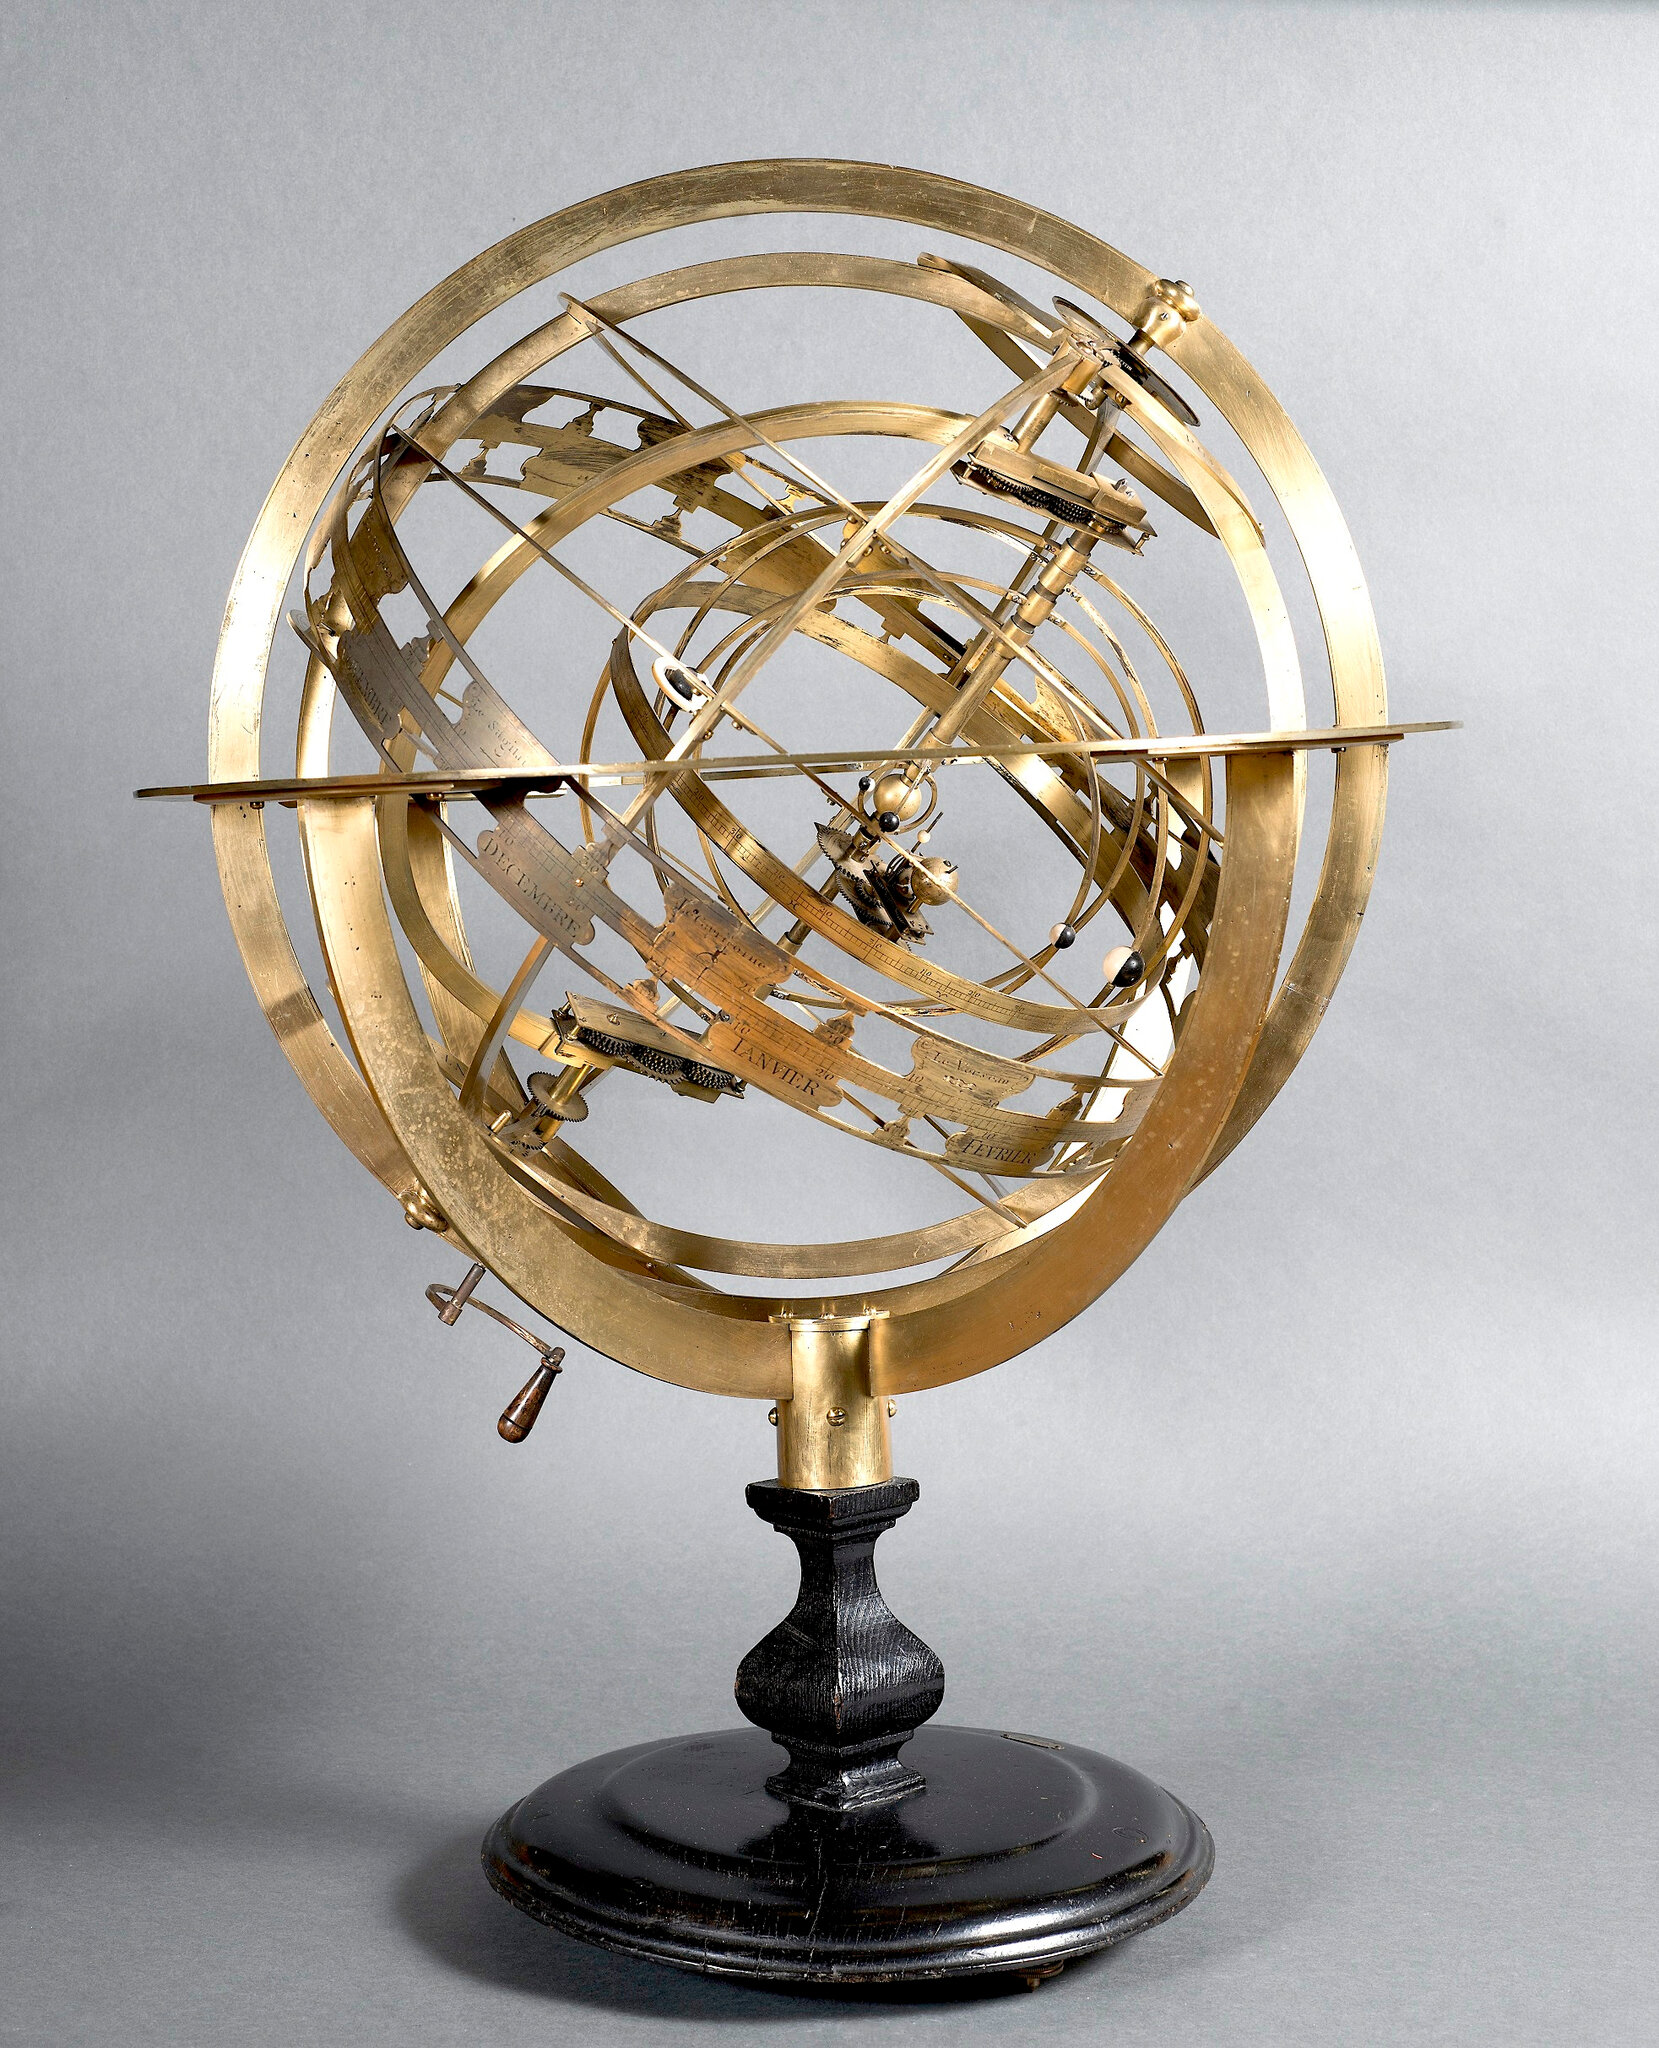 Bianchini's planisphere